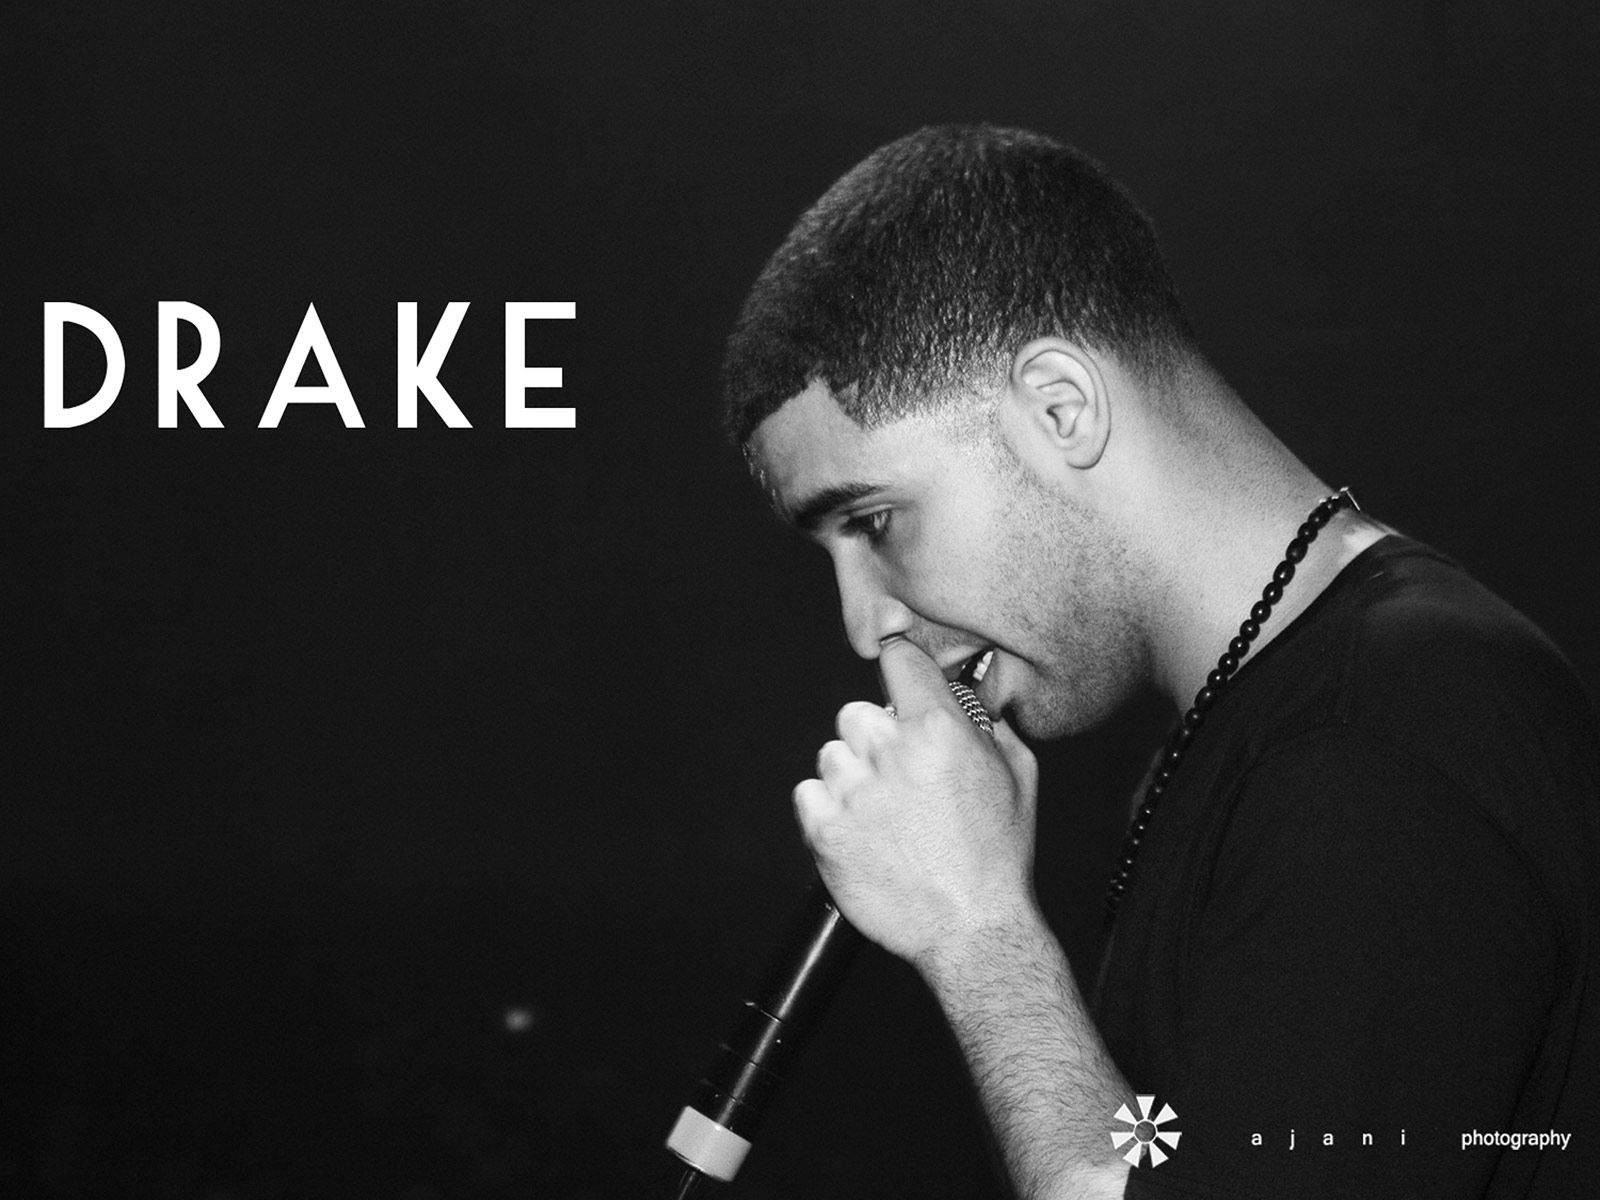 Wallpaper HighLights: Drake Wallpaper